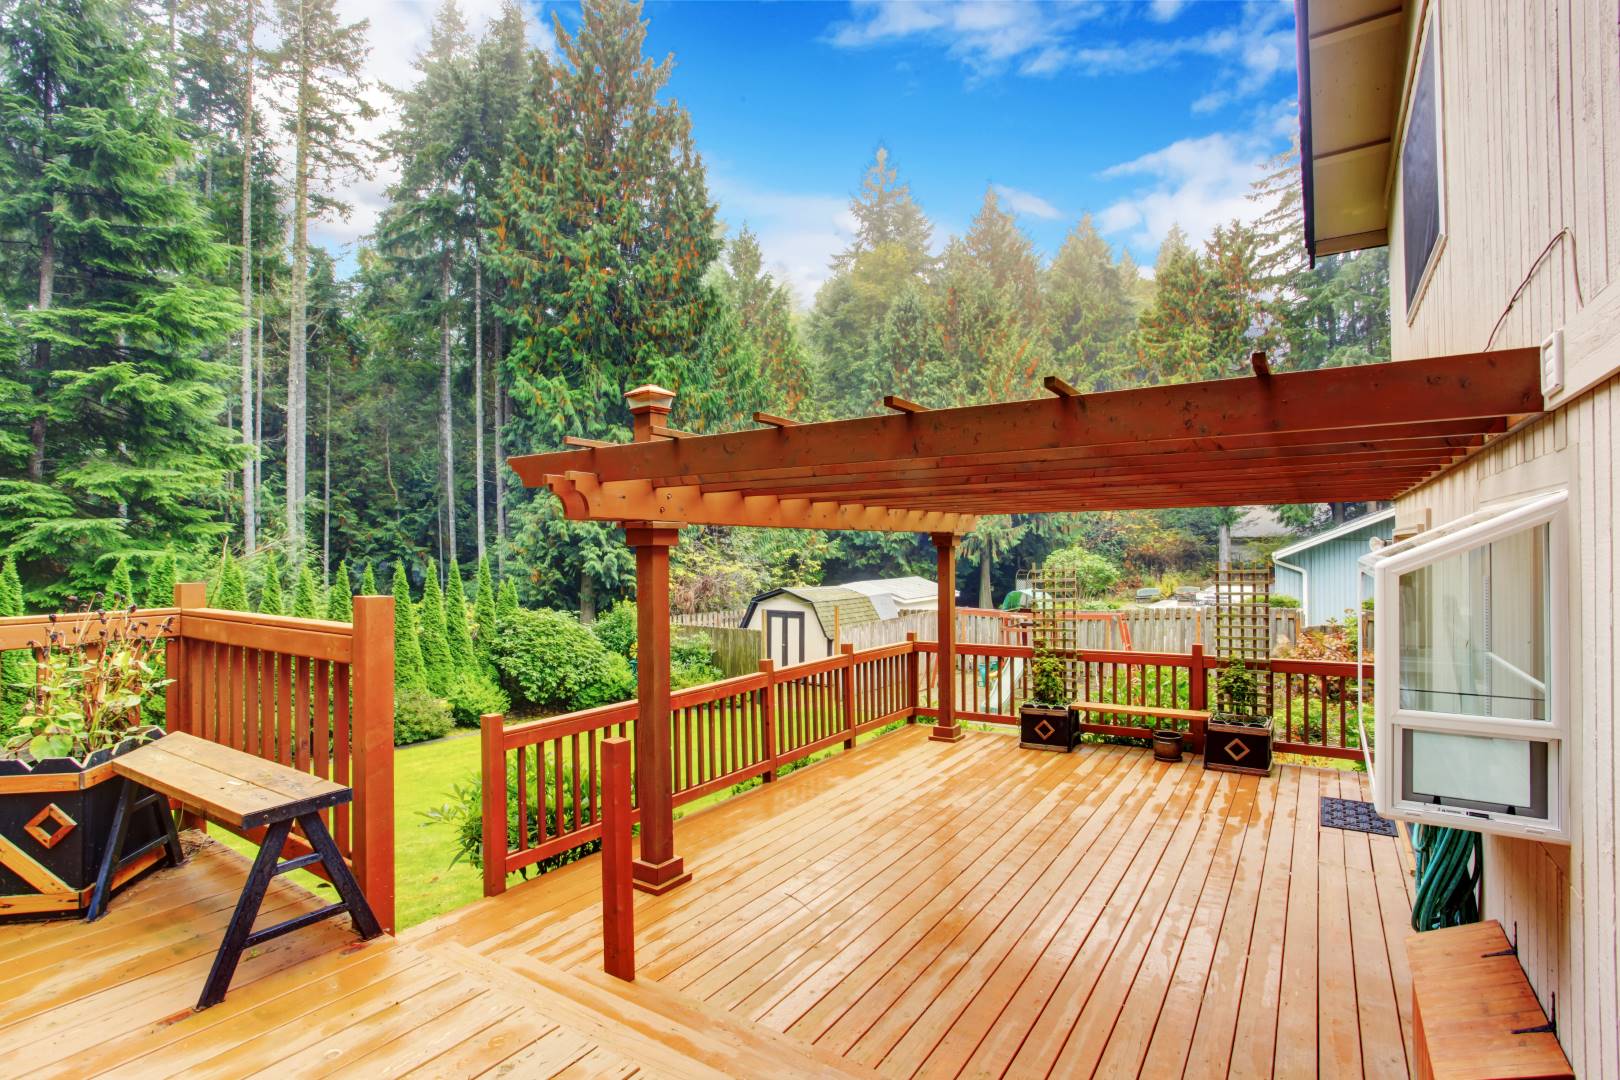 spacious wooden deck